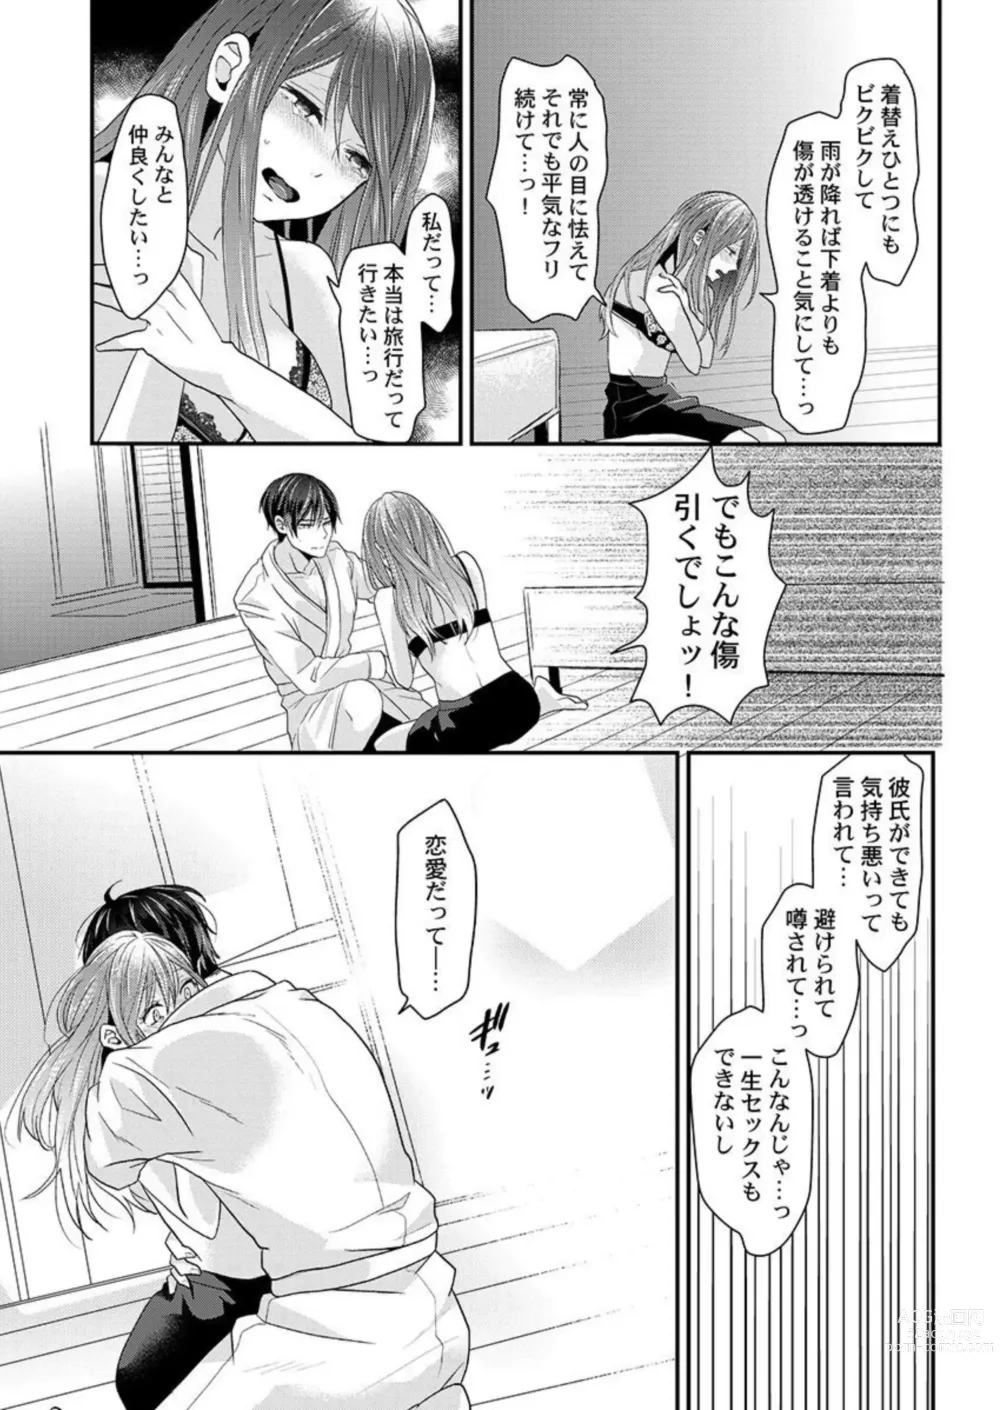 Page 16 of manga Zenbu Nuganakutatte, Ecchi wa Dekiru. 1